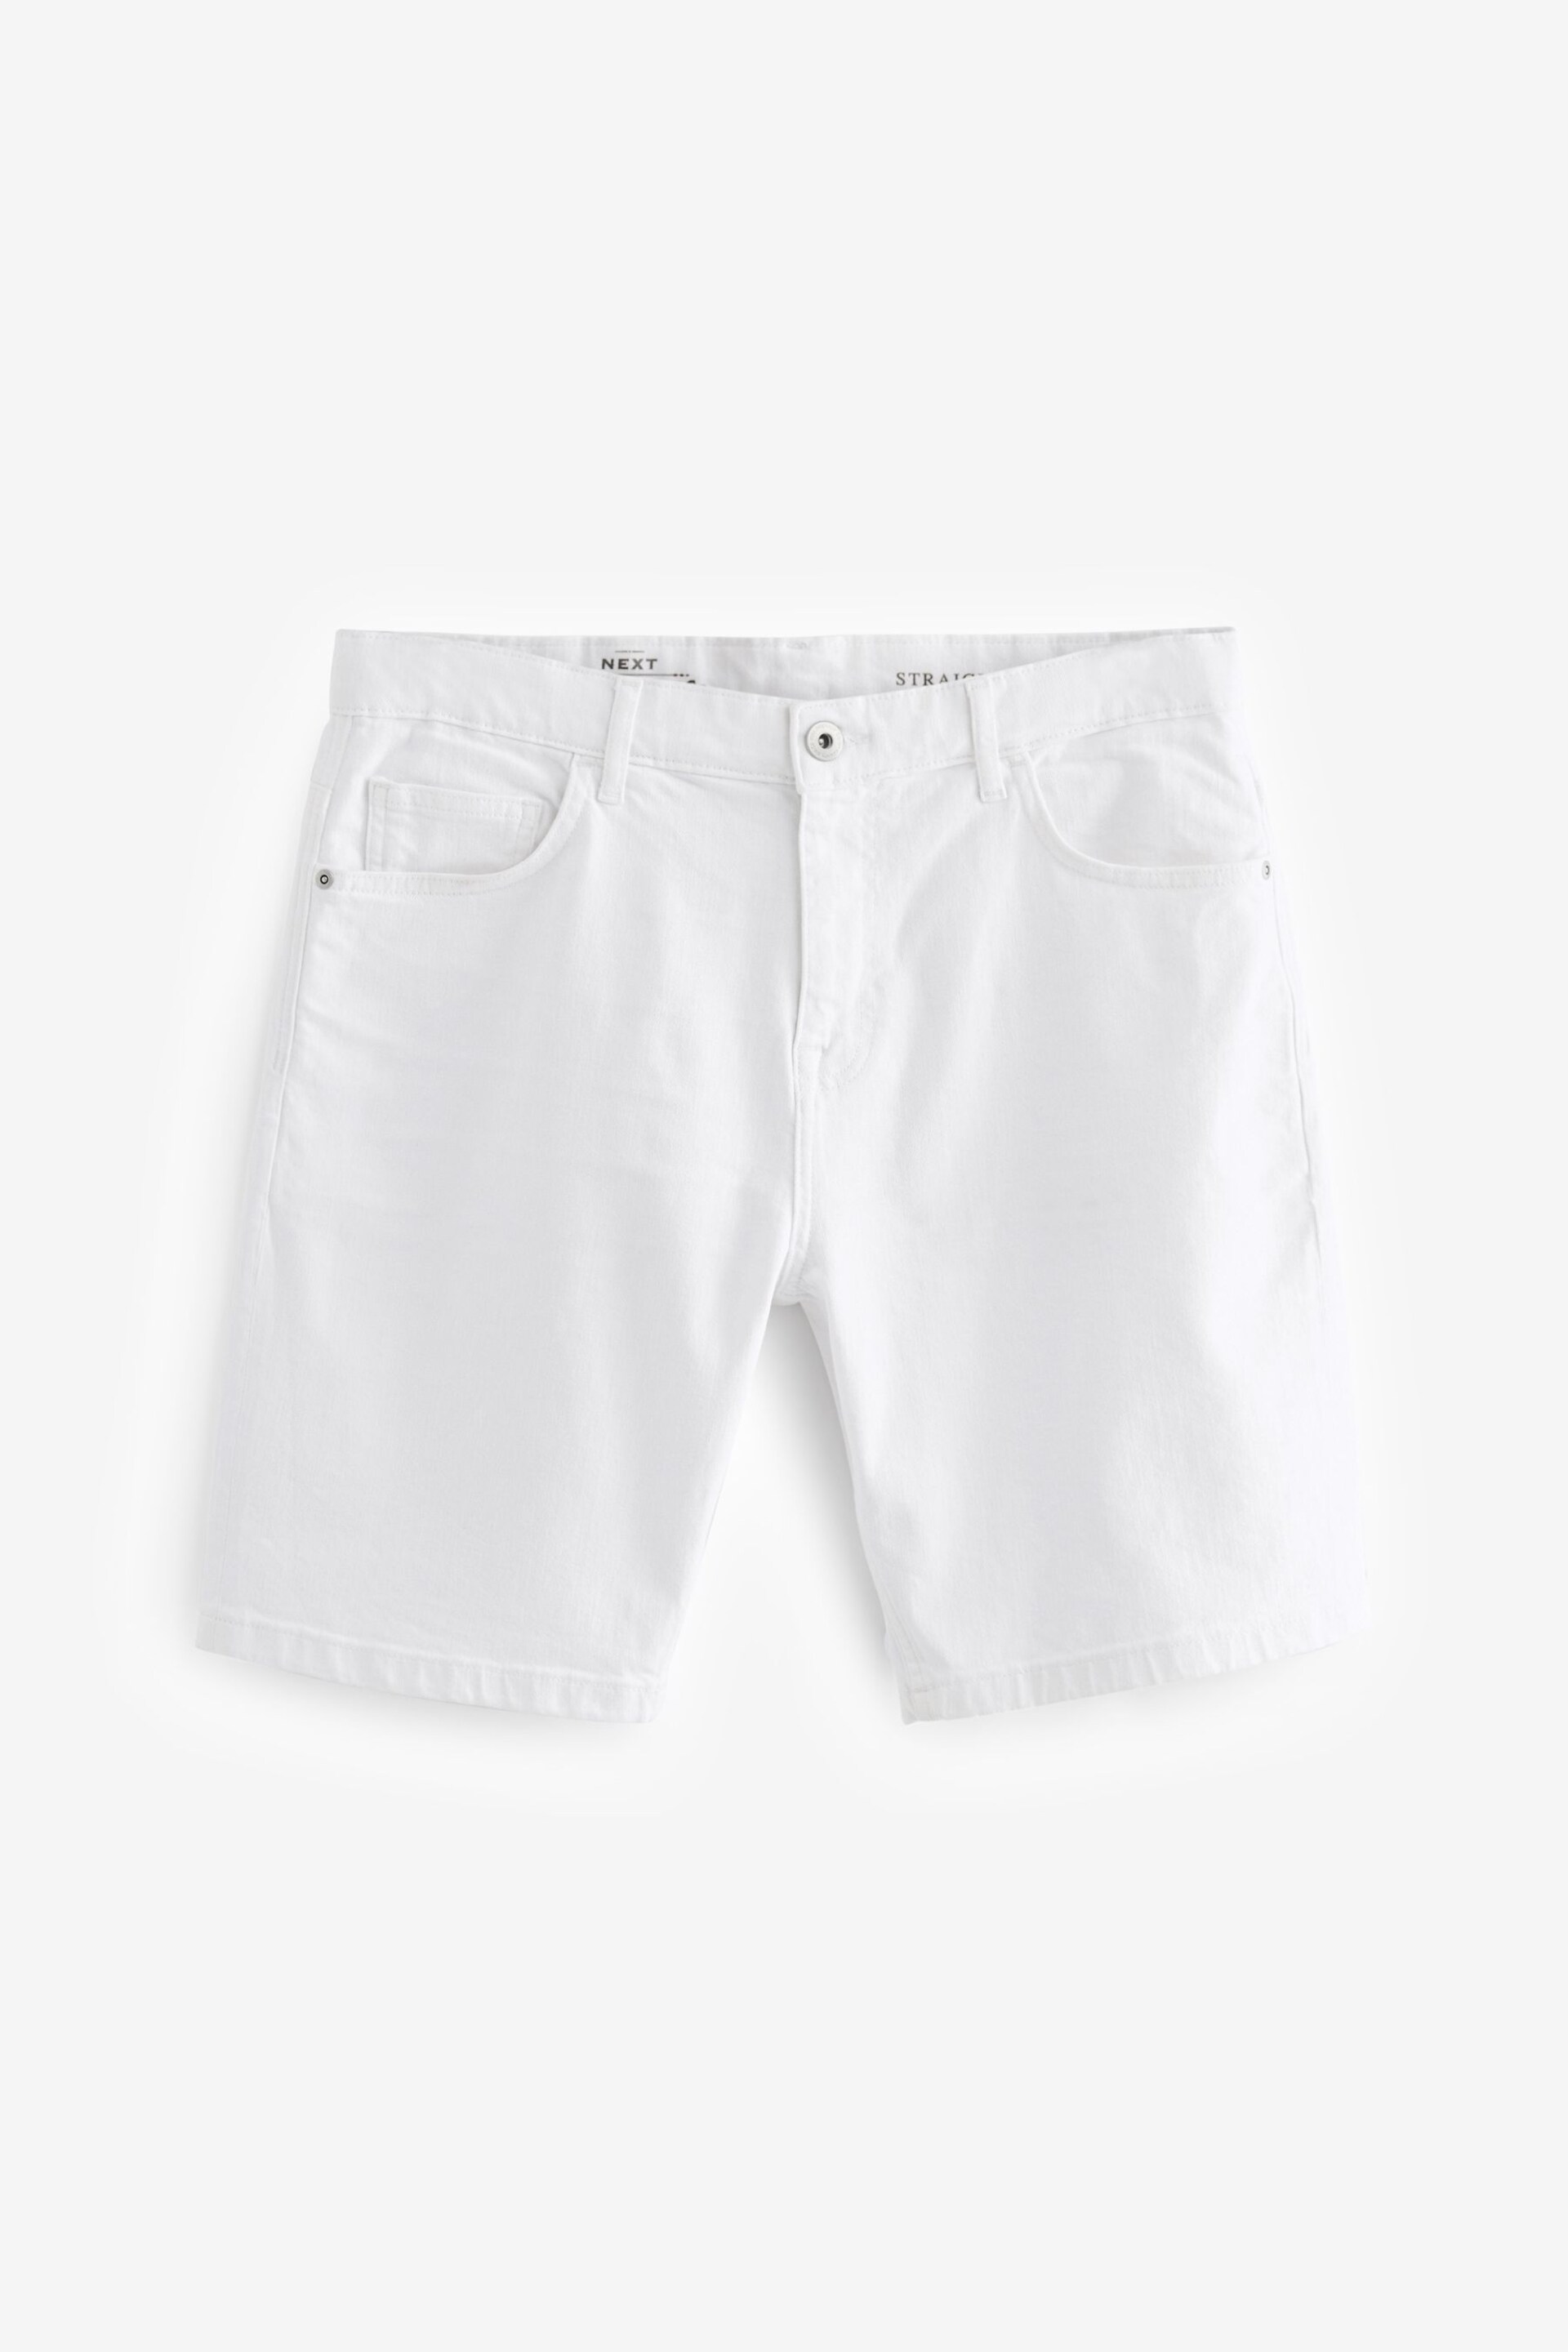 White Garment Dye Denim Shorts - Image 5 of 8